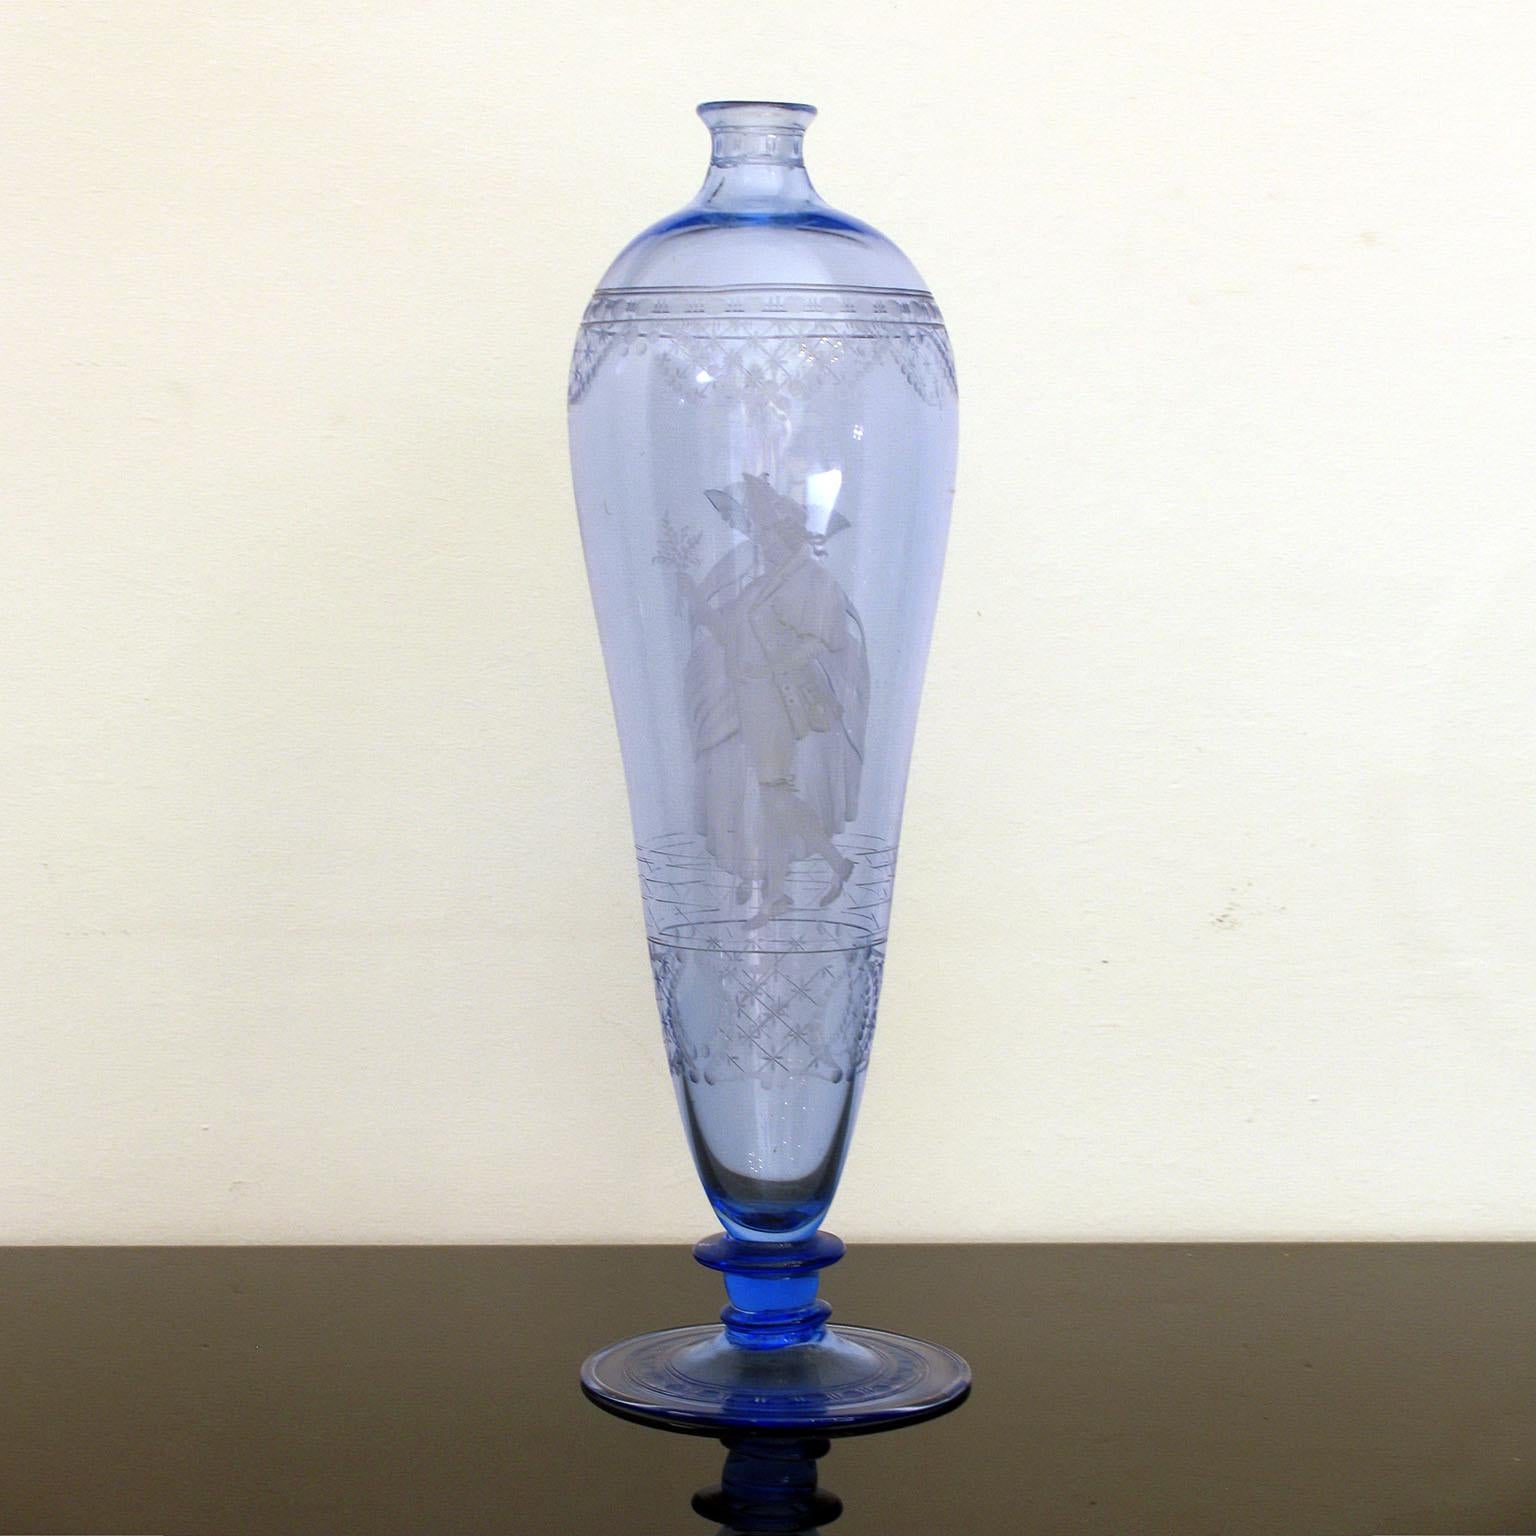 Midcentury Murano Glass Bottle by Guido Balsamo Stella for S.A.L.I.R (Muranoglas)